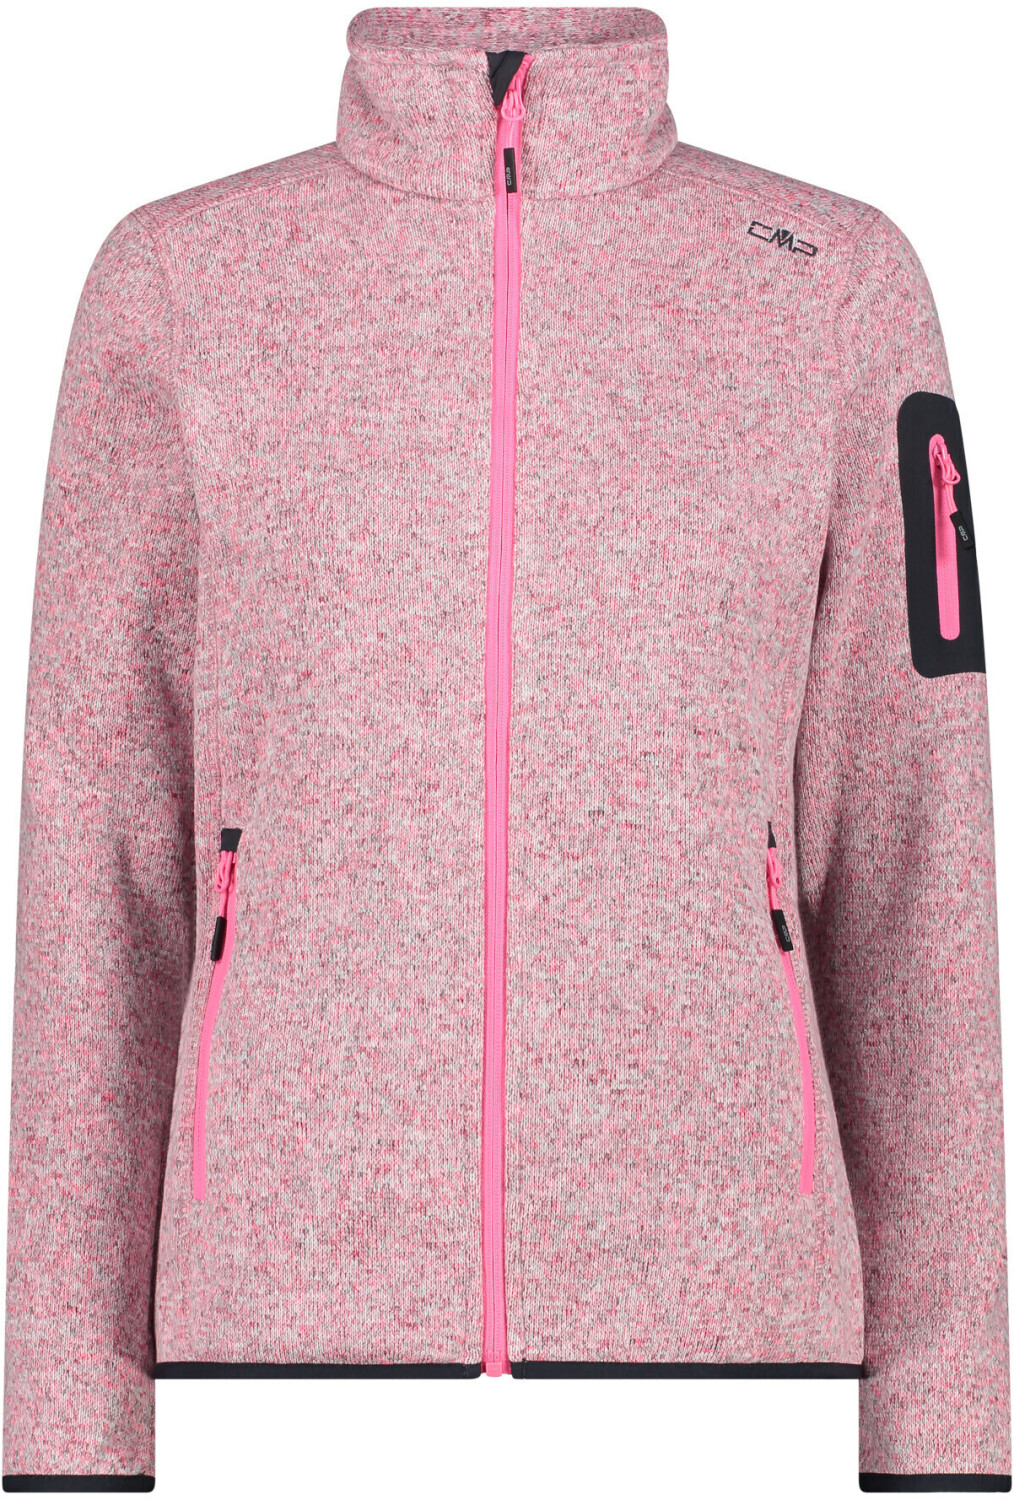 Deals on pink CMP Best (3H14746) Jacket (Today) Knit-Tech Melange Fleece from Buy fluo-bianco £34.99 –